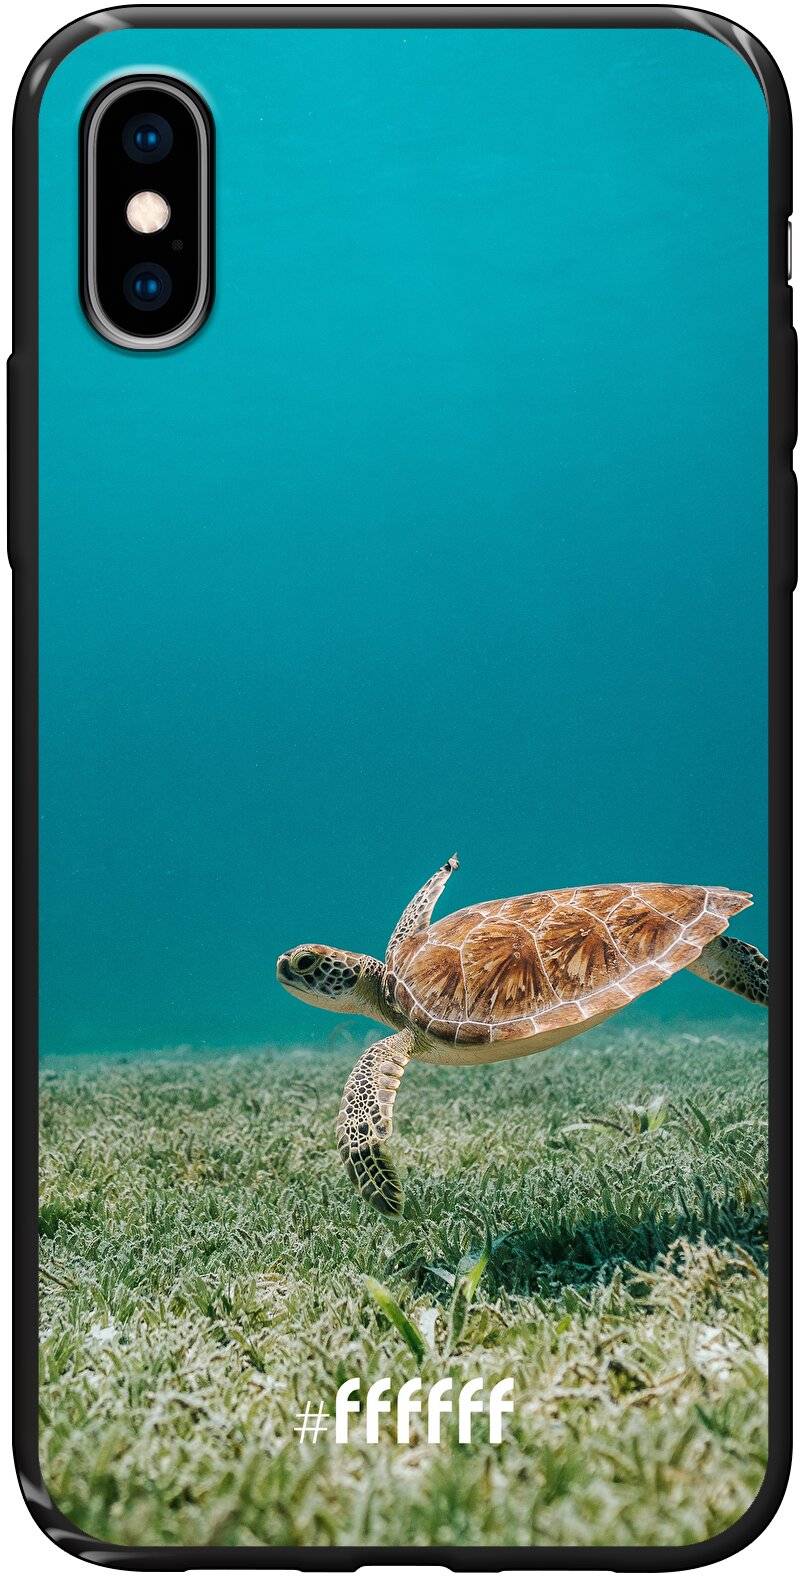 Turtle iPhone Xs